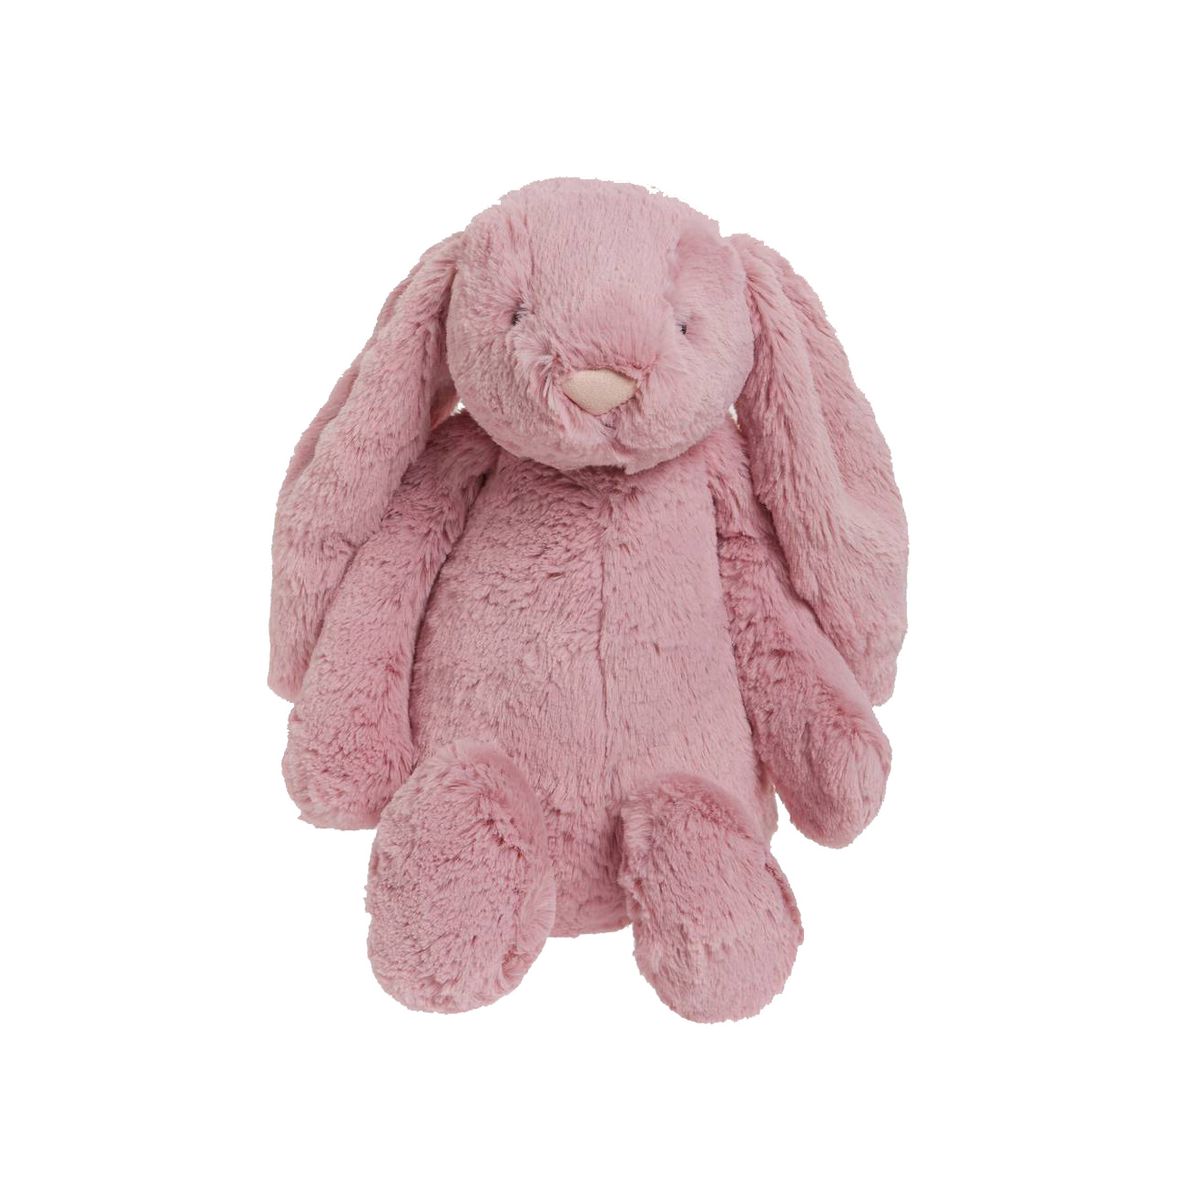 'Large Bashful Bunny' Stuffed Animal